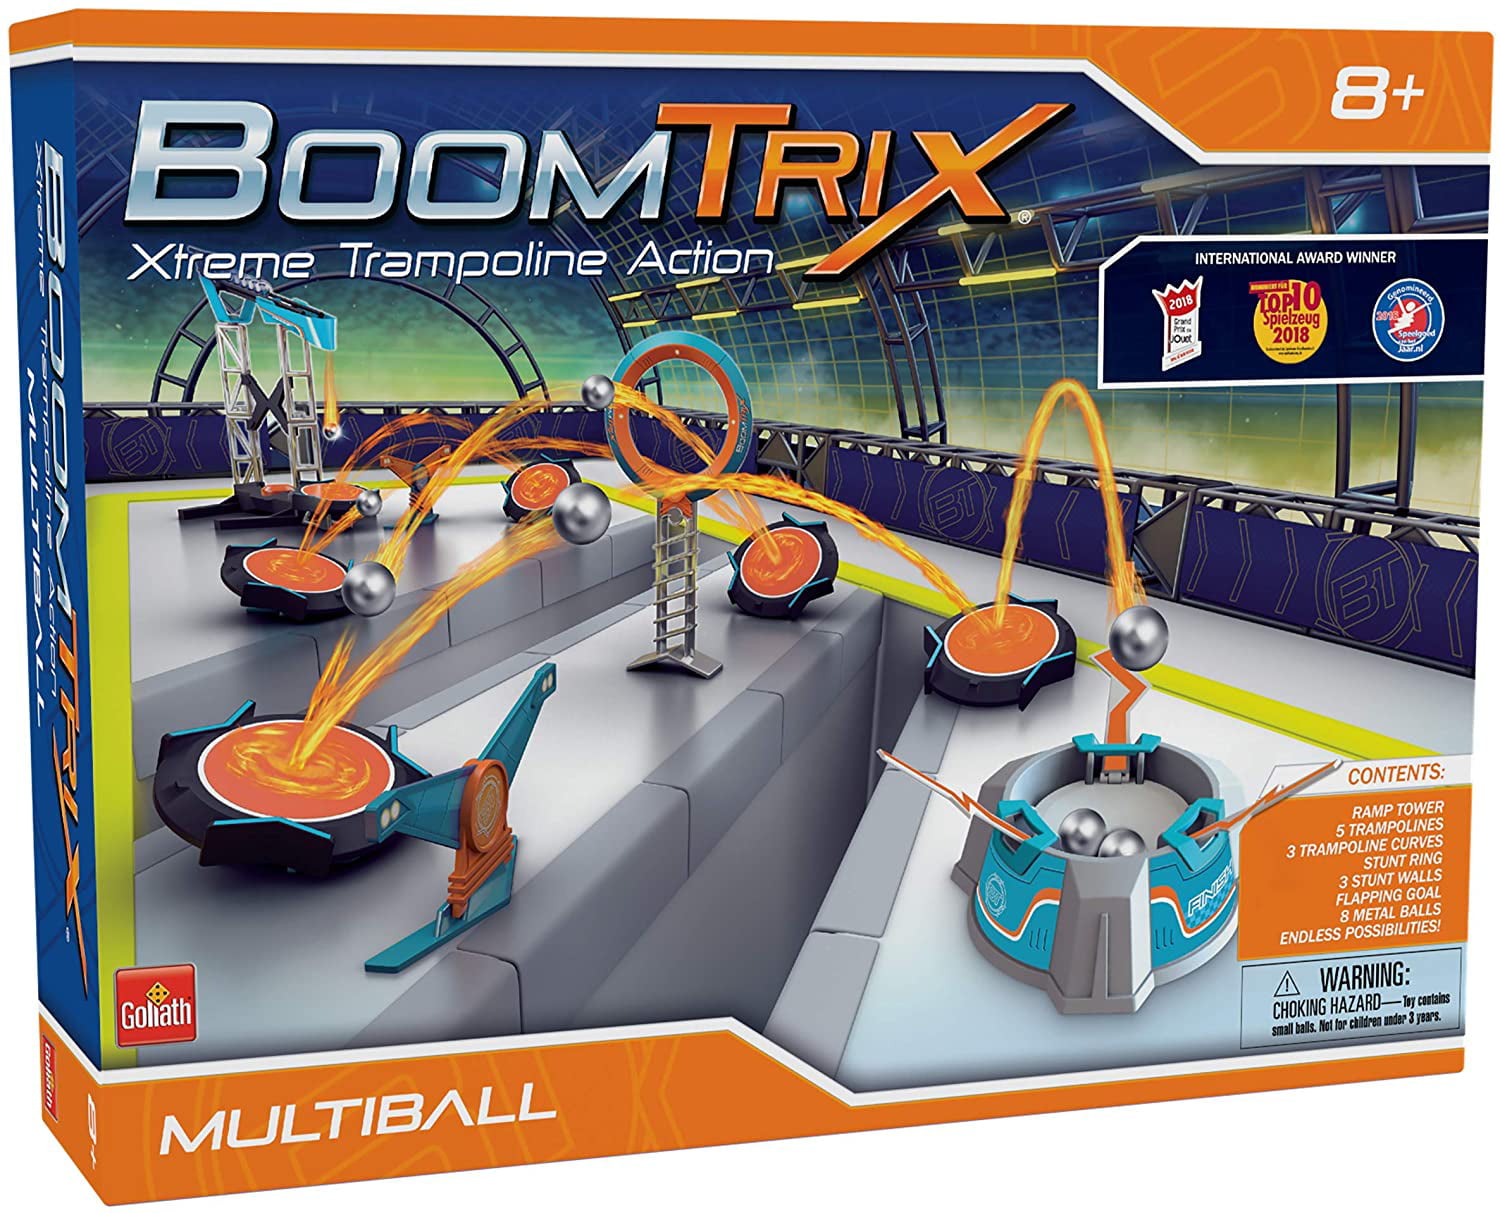 Kinetic Metal Ball Chain Reaction Stunt Kit ... Boomtrix Stunt Pack by Goliath 